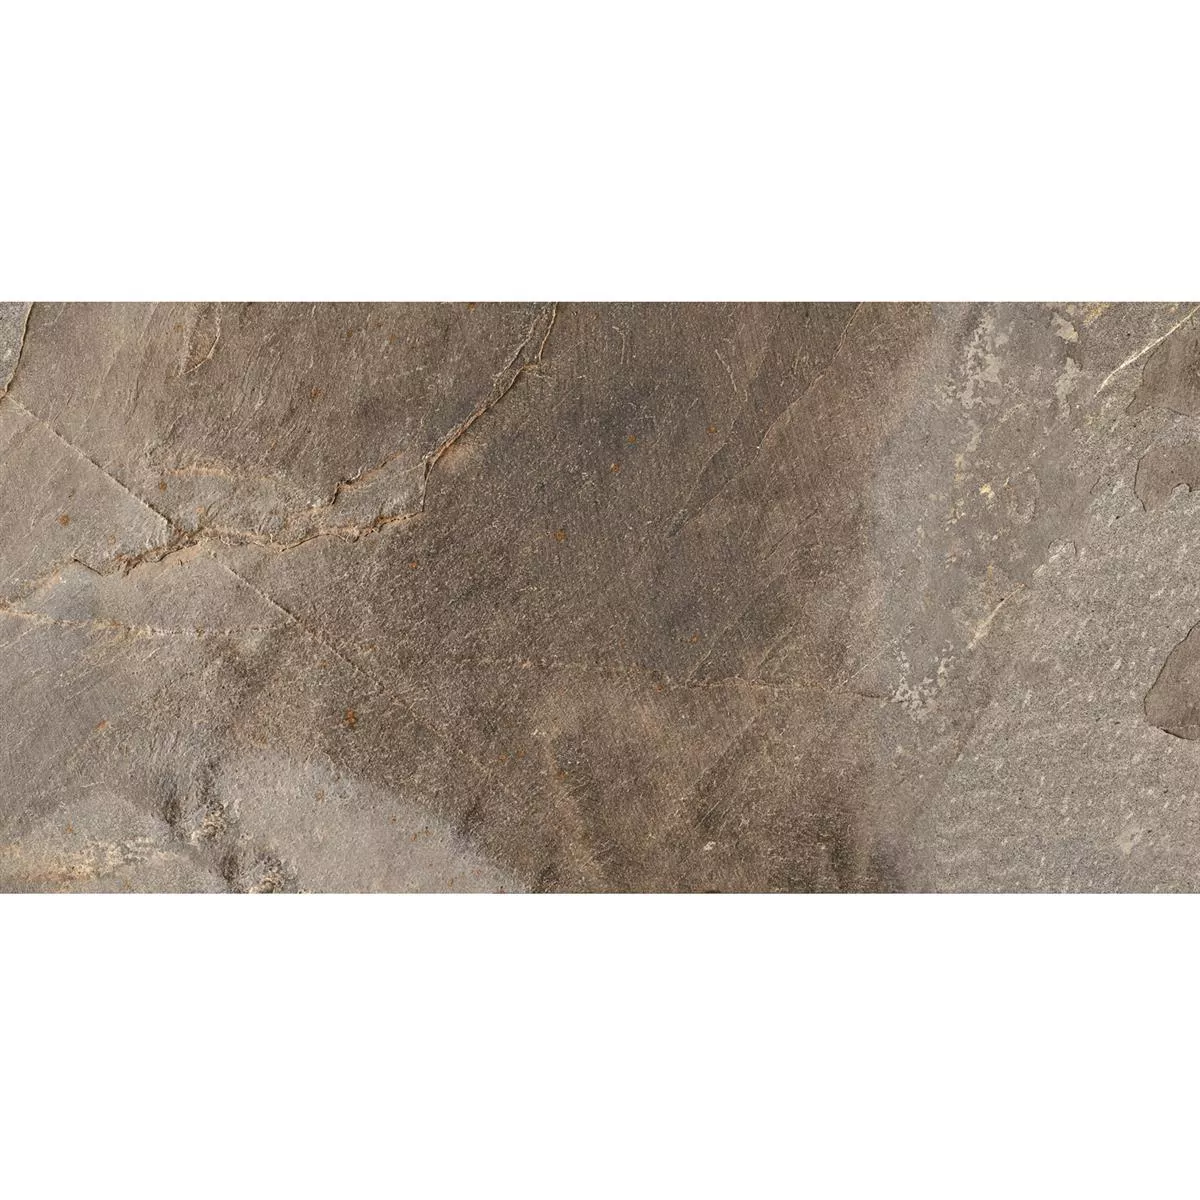 Gresie Homeland Aspect De Piatră Naturală R10 Bronz 30x60cm